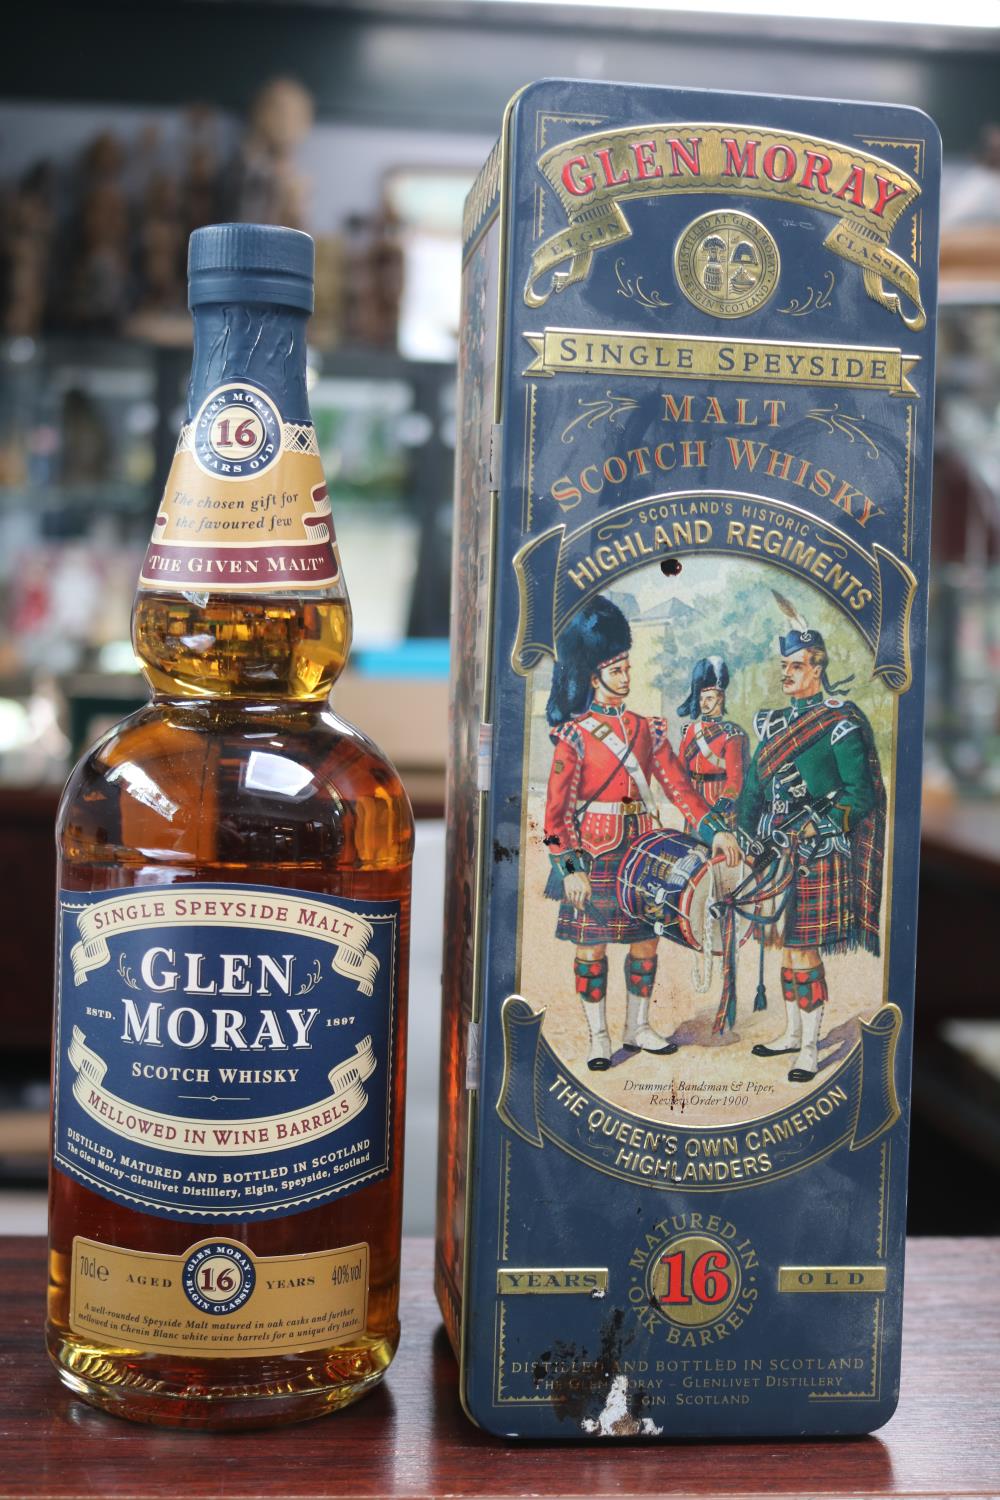 Glen Moray Malt Scotch Whisky 16 Year in metal case